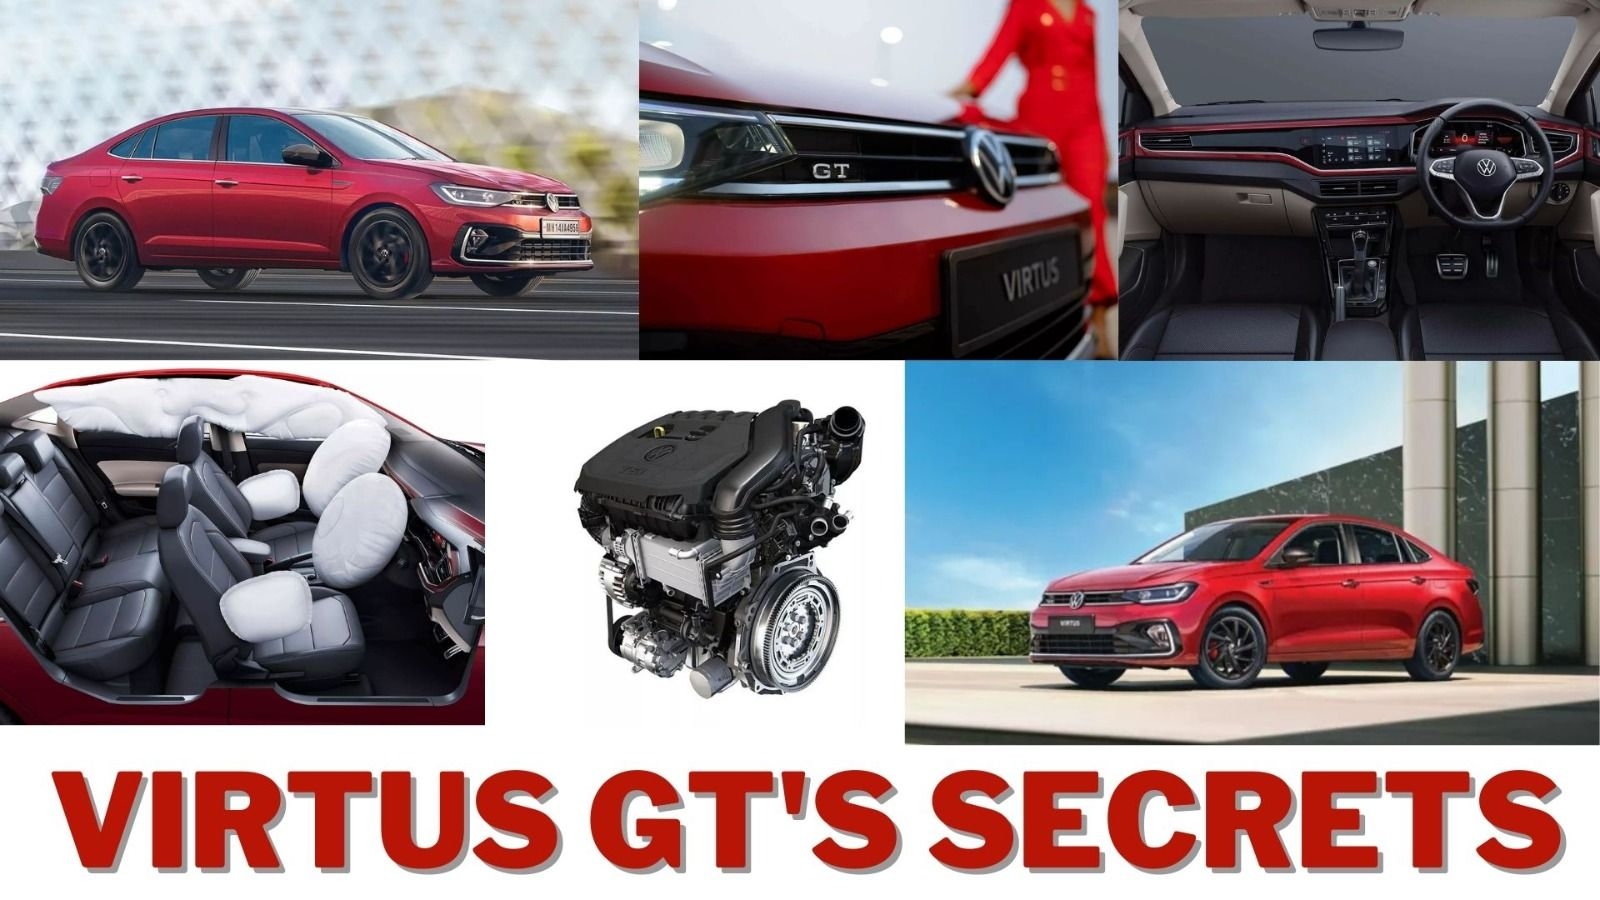  Volkswagen Virtus GT: Buckle up and discover Virtus GT's Secrets  news